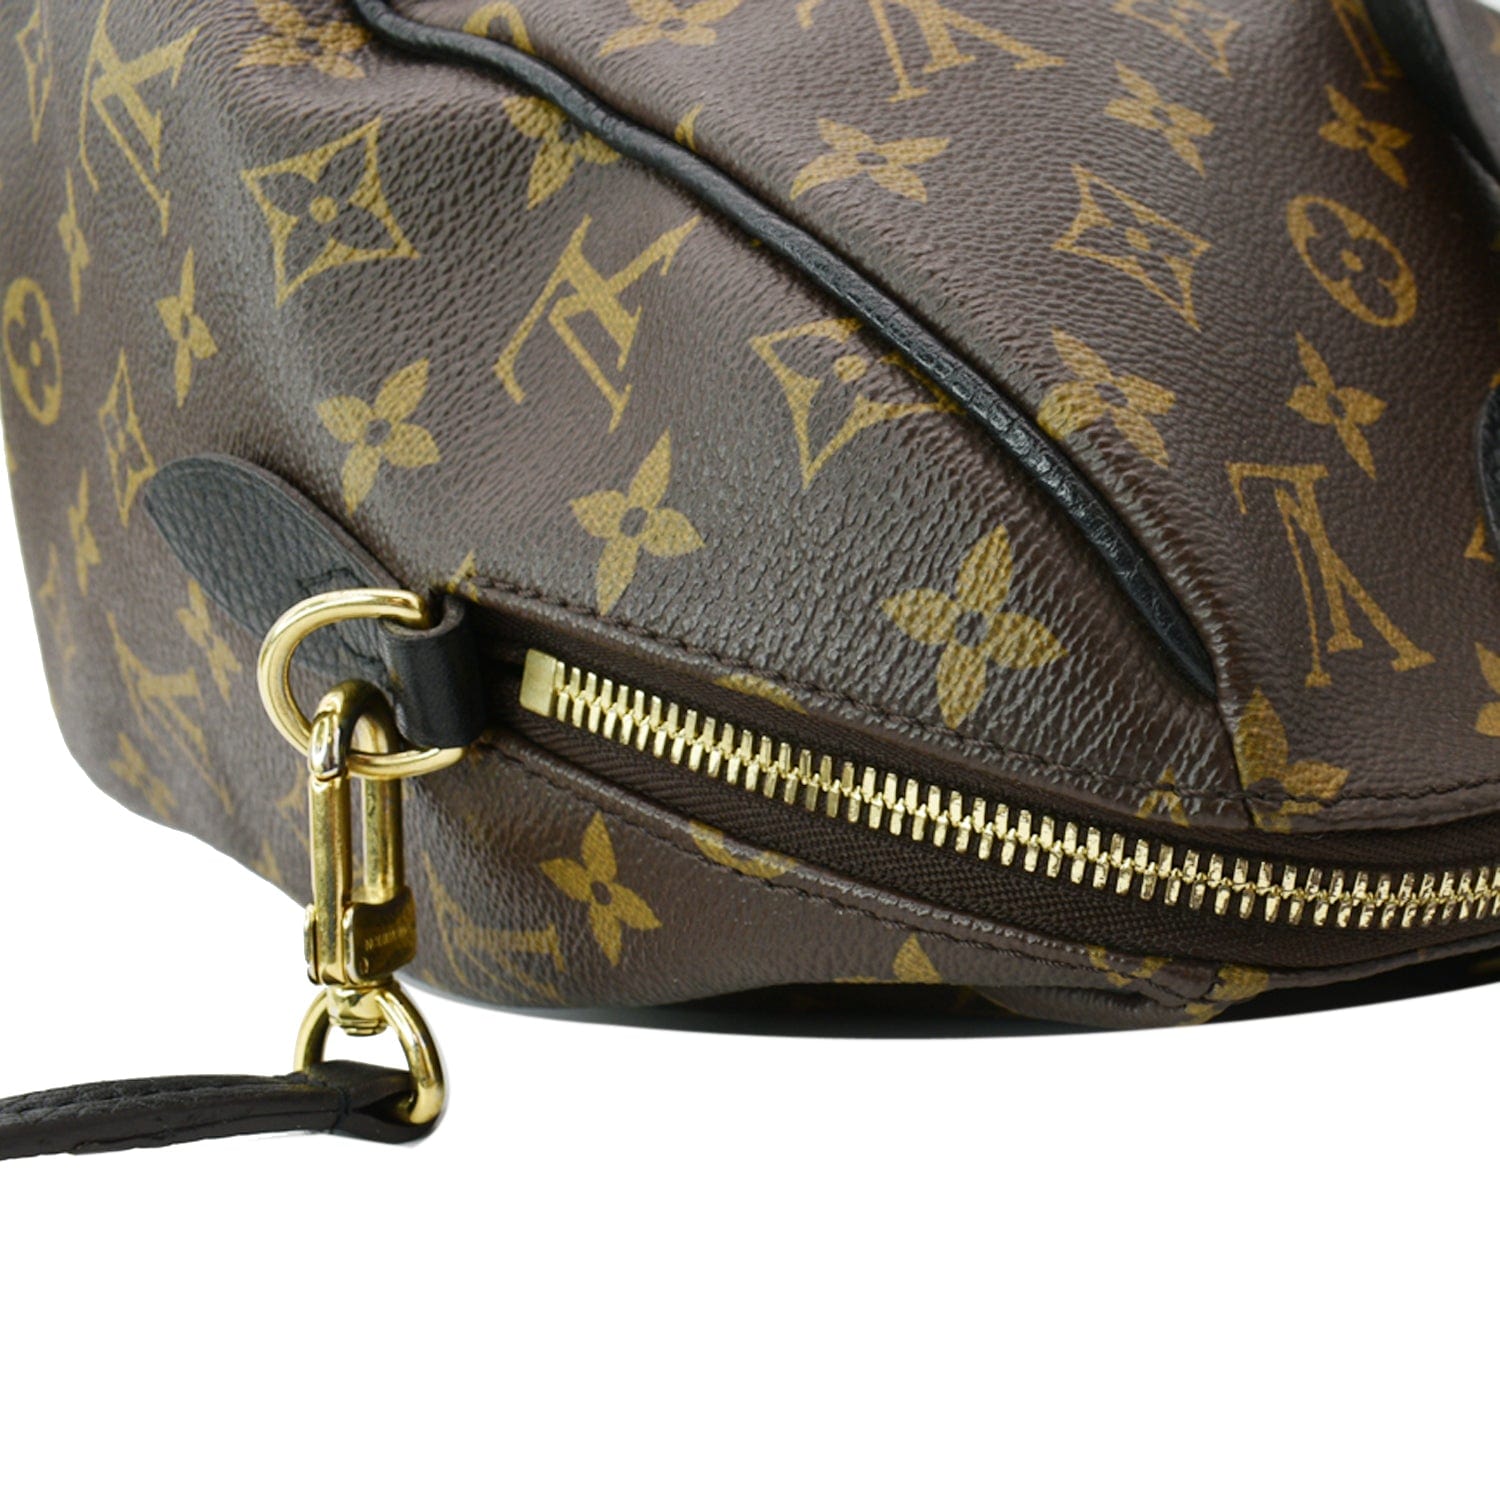 Louis Vuitton Handbag Brown - $500 (53% Off Retail) - From Meredith